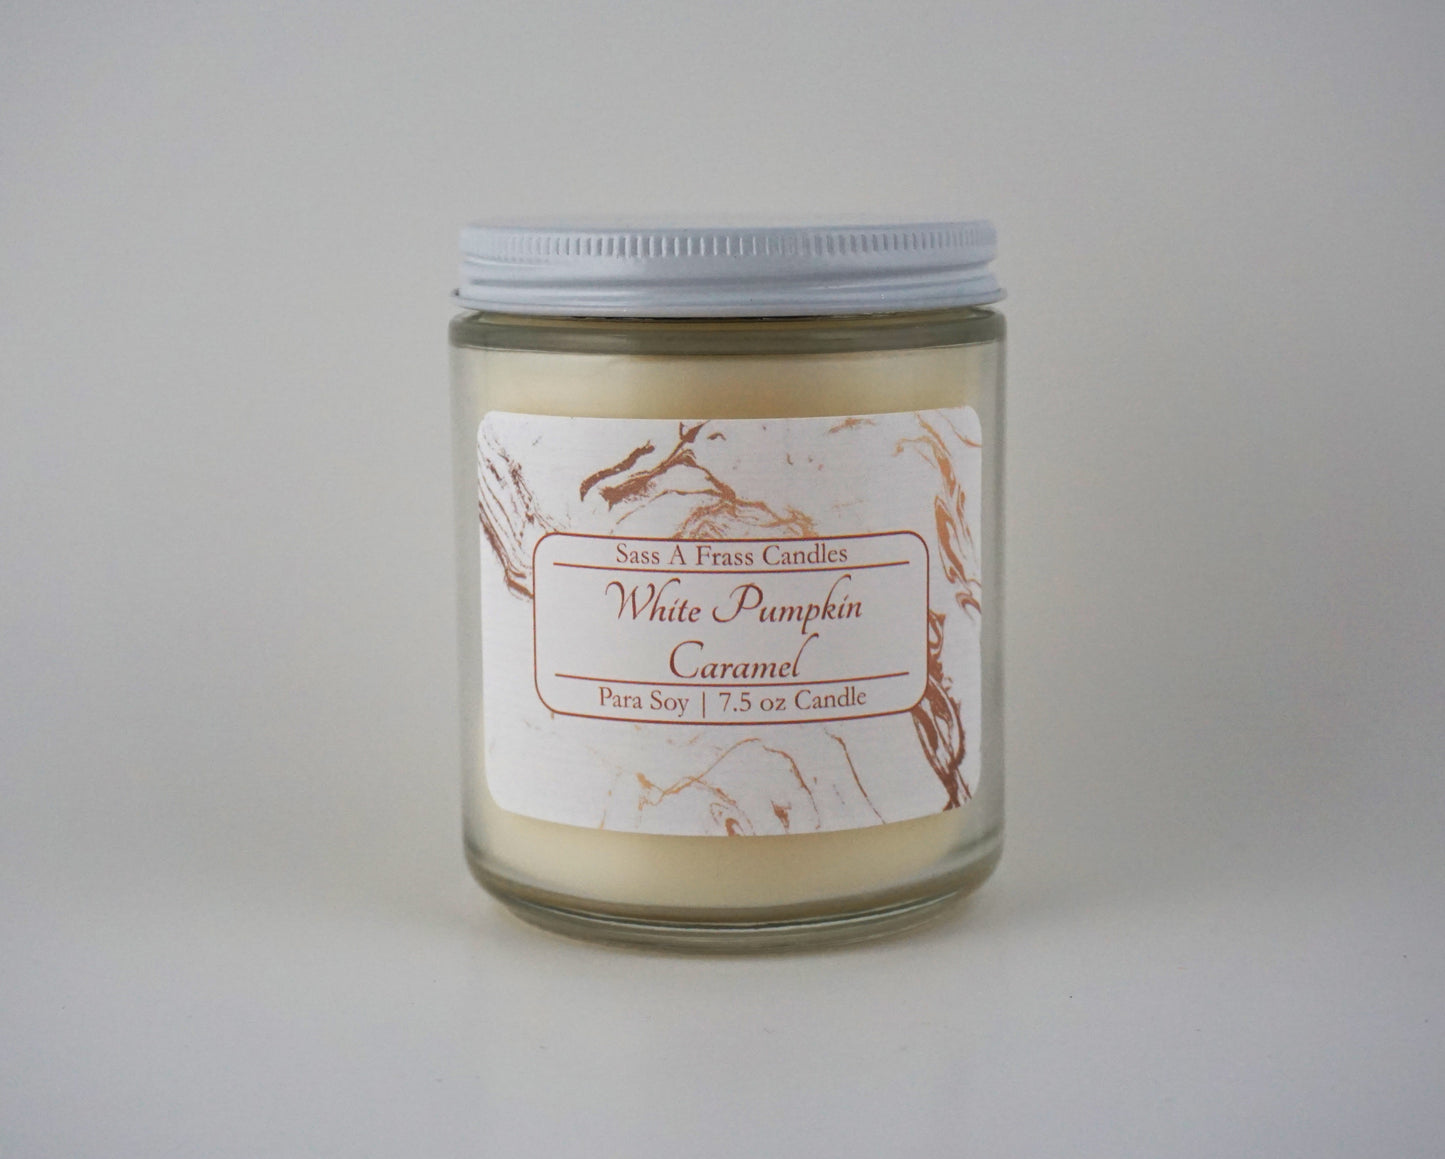 White Pumpkin Caramel 7.5 oz Candle